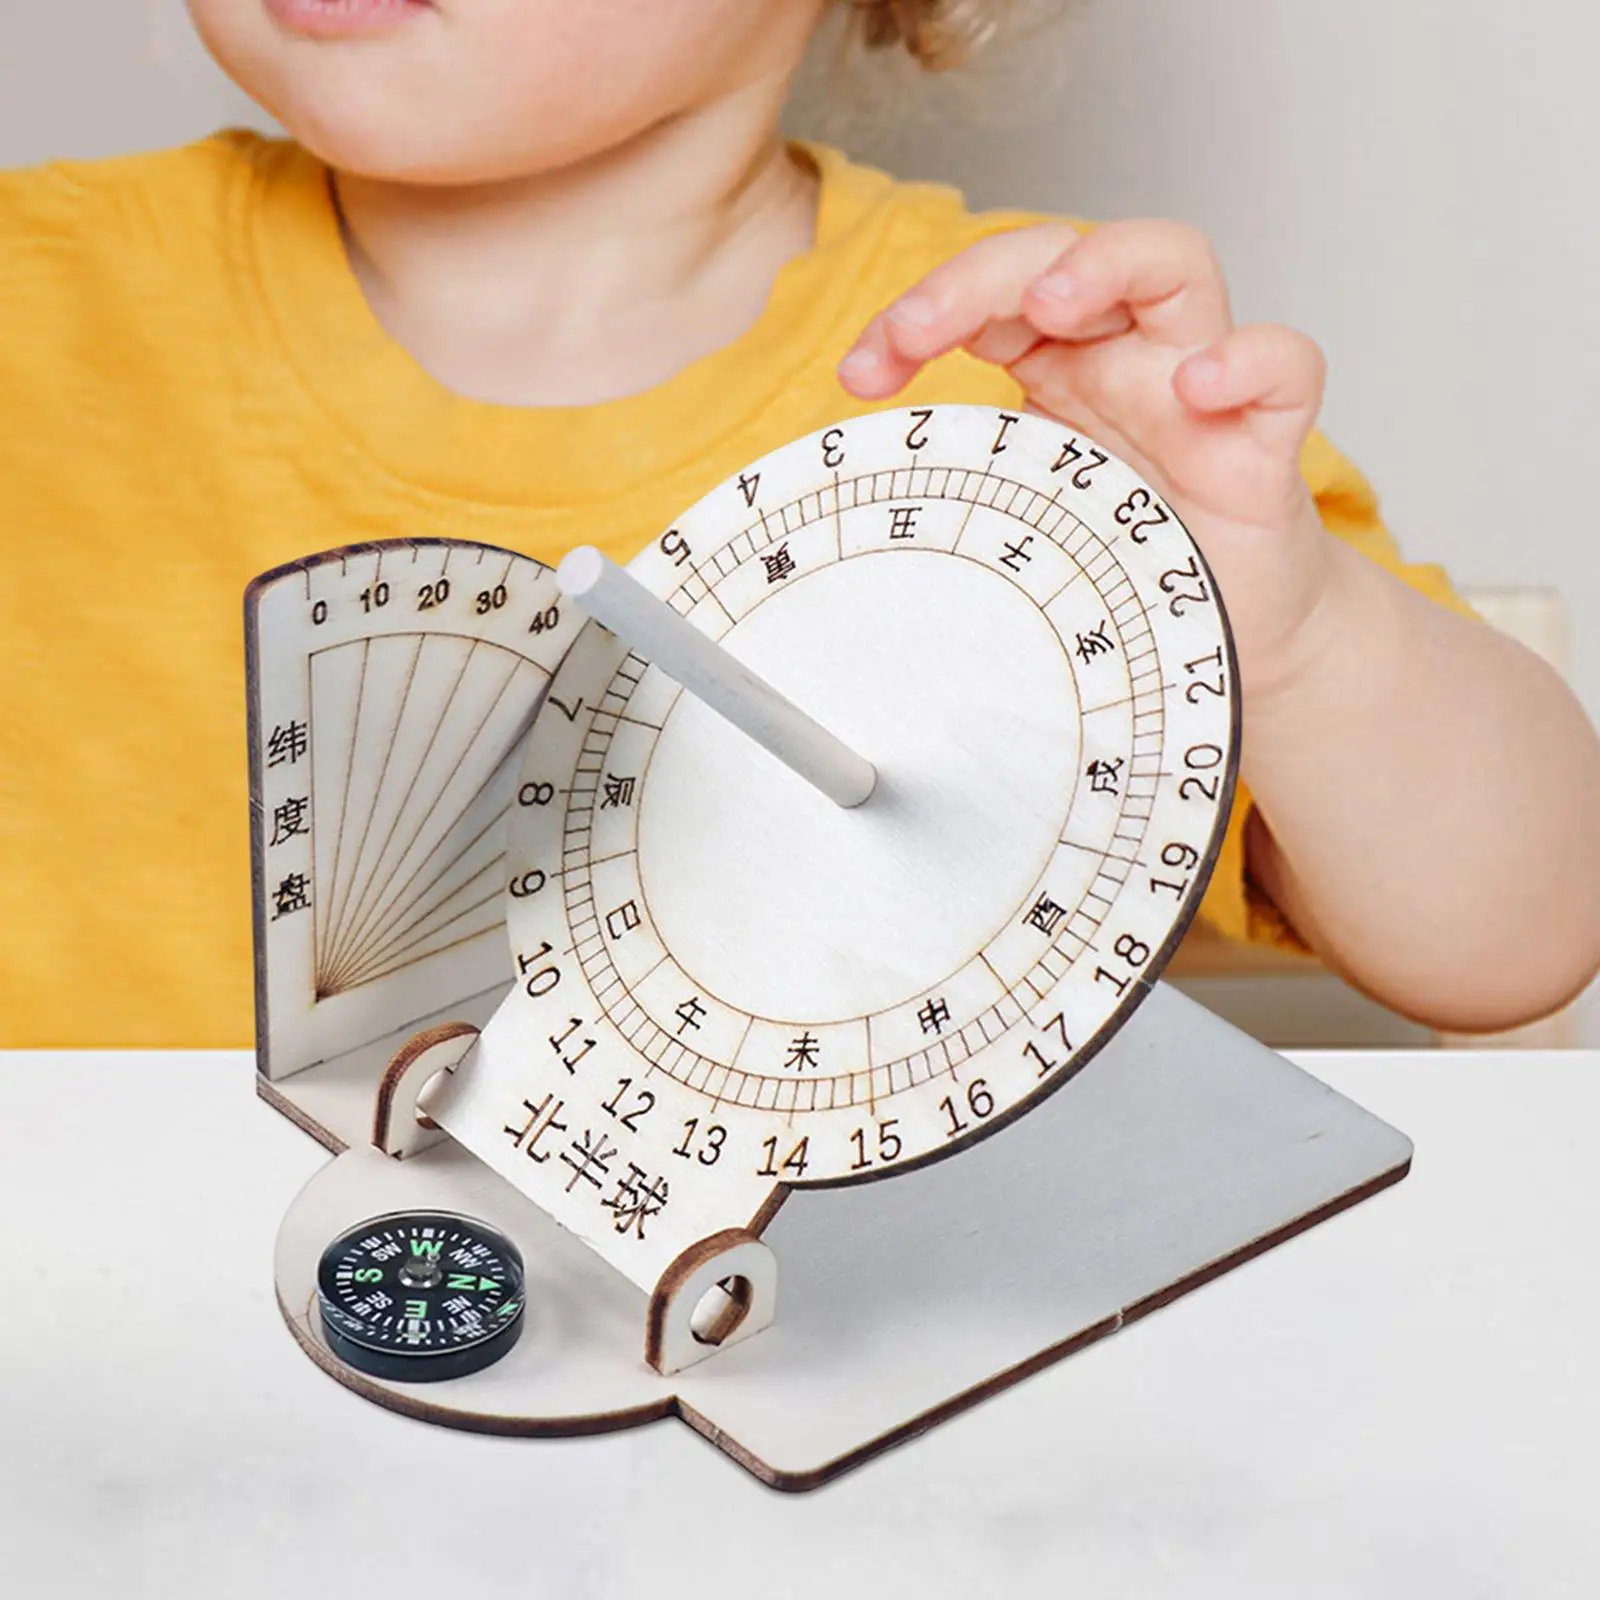 Equatorial Sundial Clock Scientific Experiment Kit Developing Educational Toy DIY Sundial Model Kit Teaching Aid for Toddler Boy